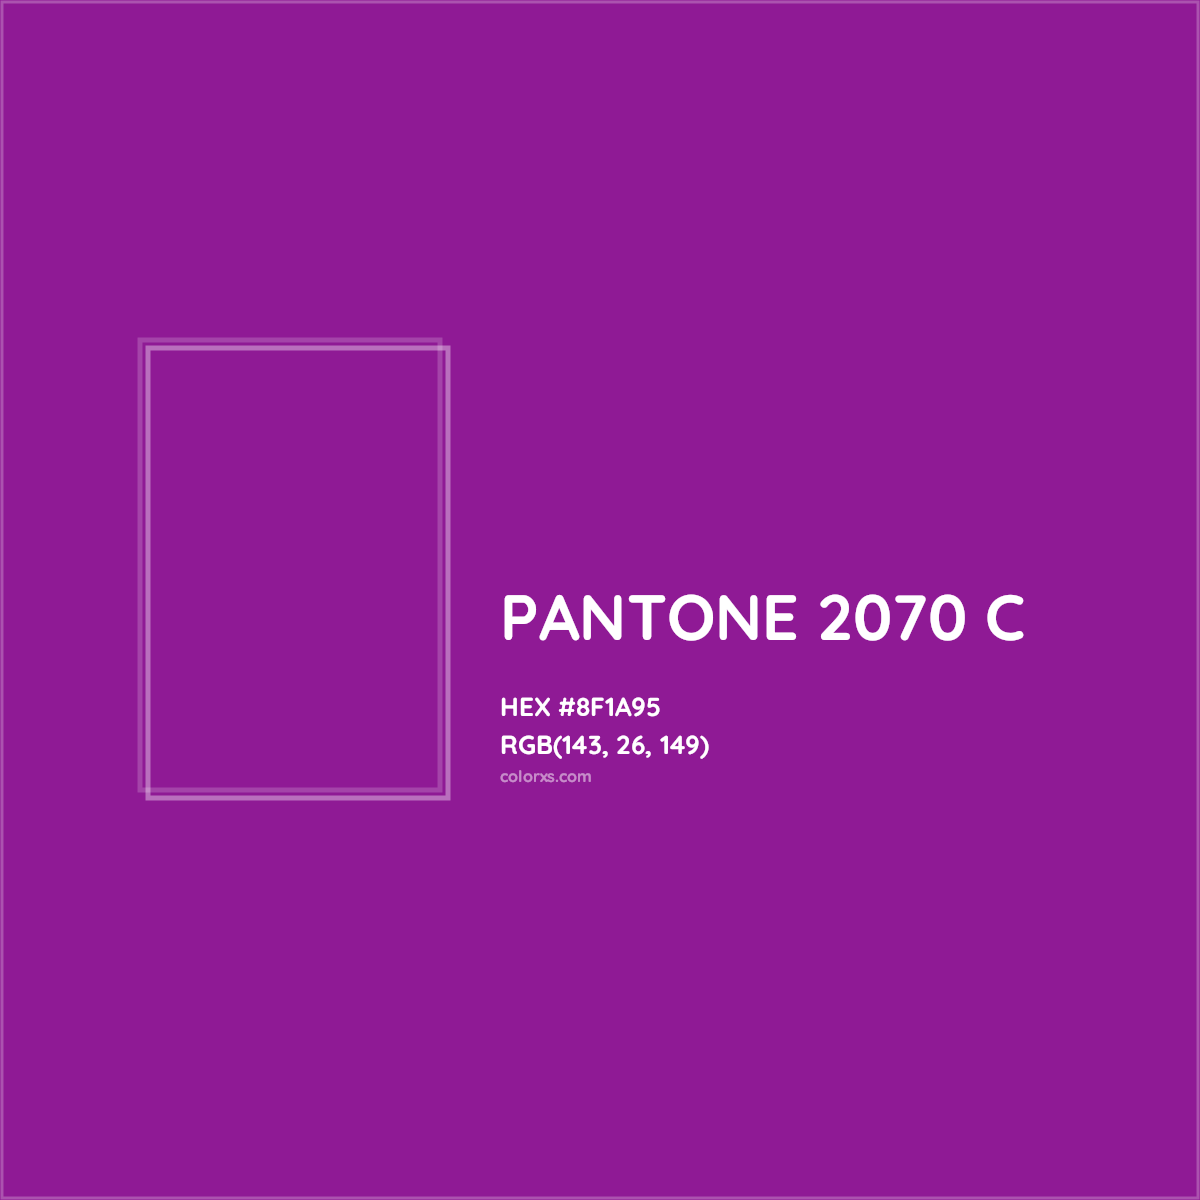 HEX #8F1A95 PANTONE 2070 C CMS Pantone PMS - Color Code